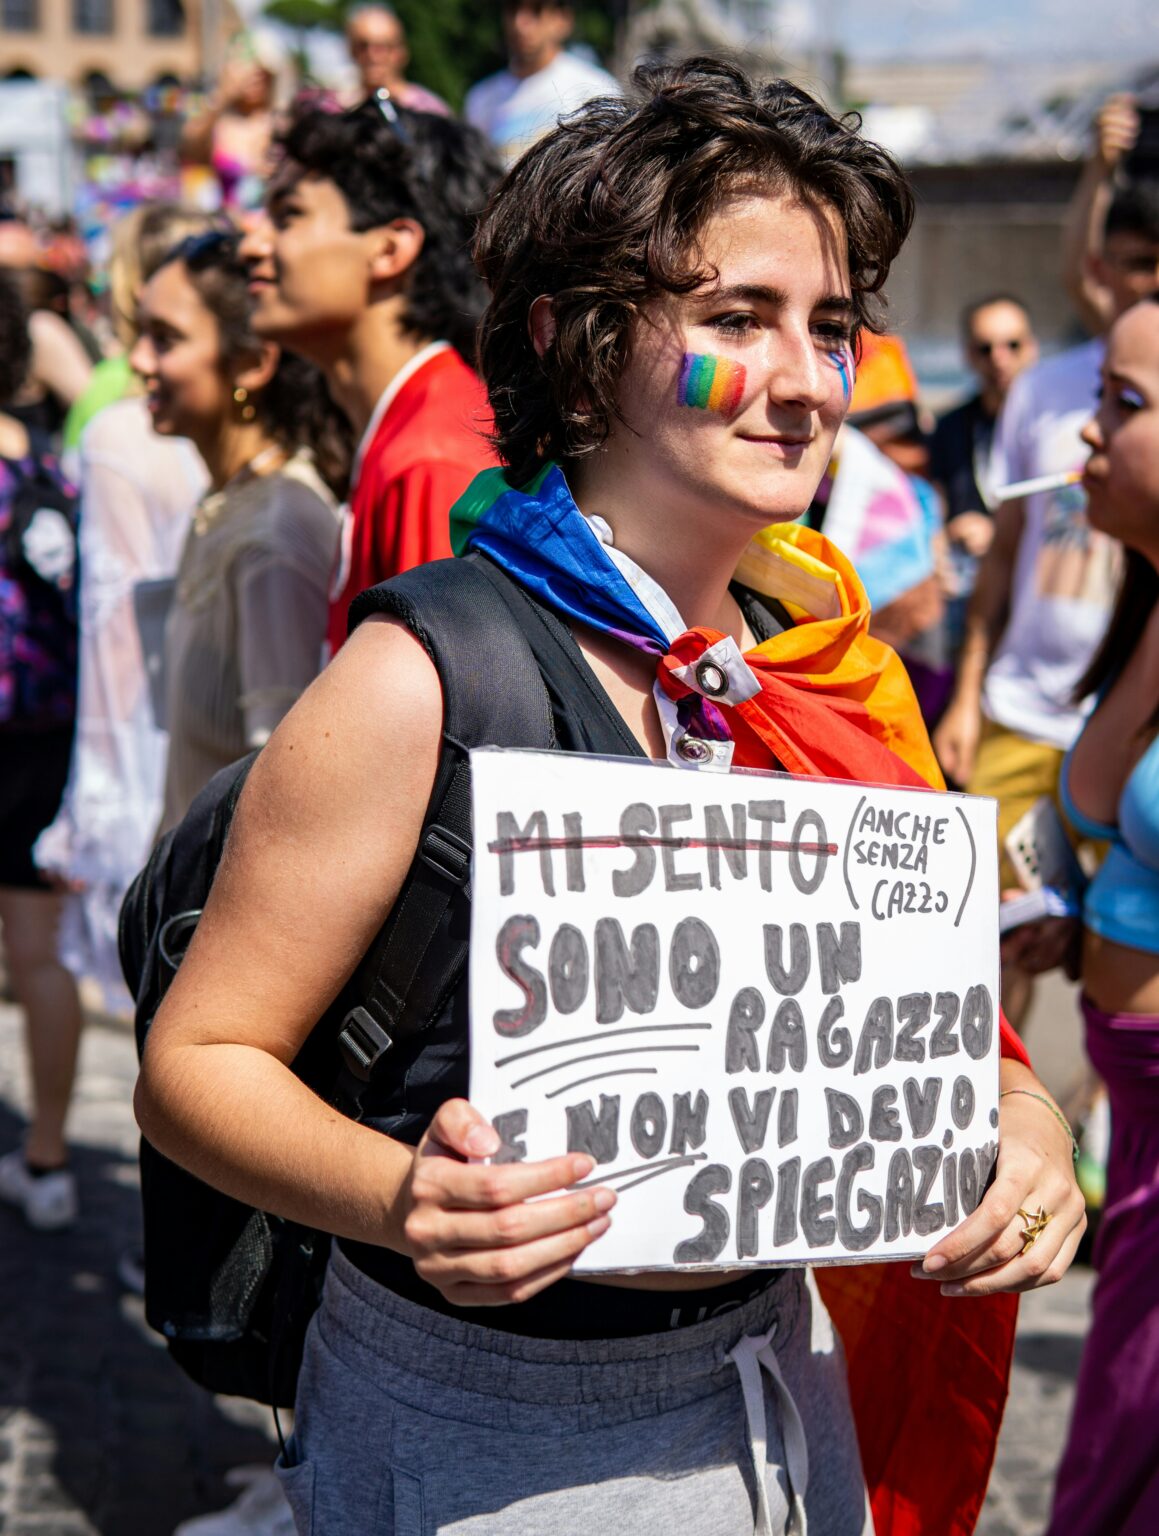 A woman protests Italian anti-LGBTI legislation with rainbow flag